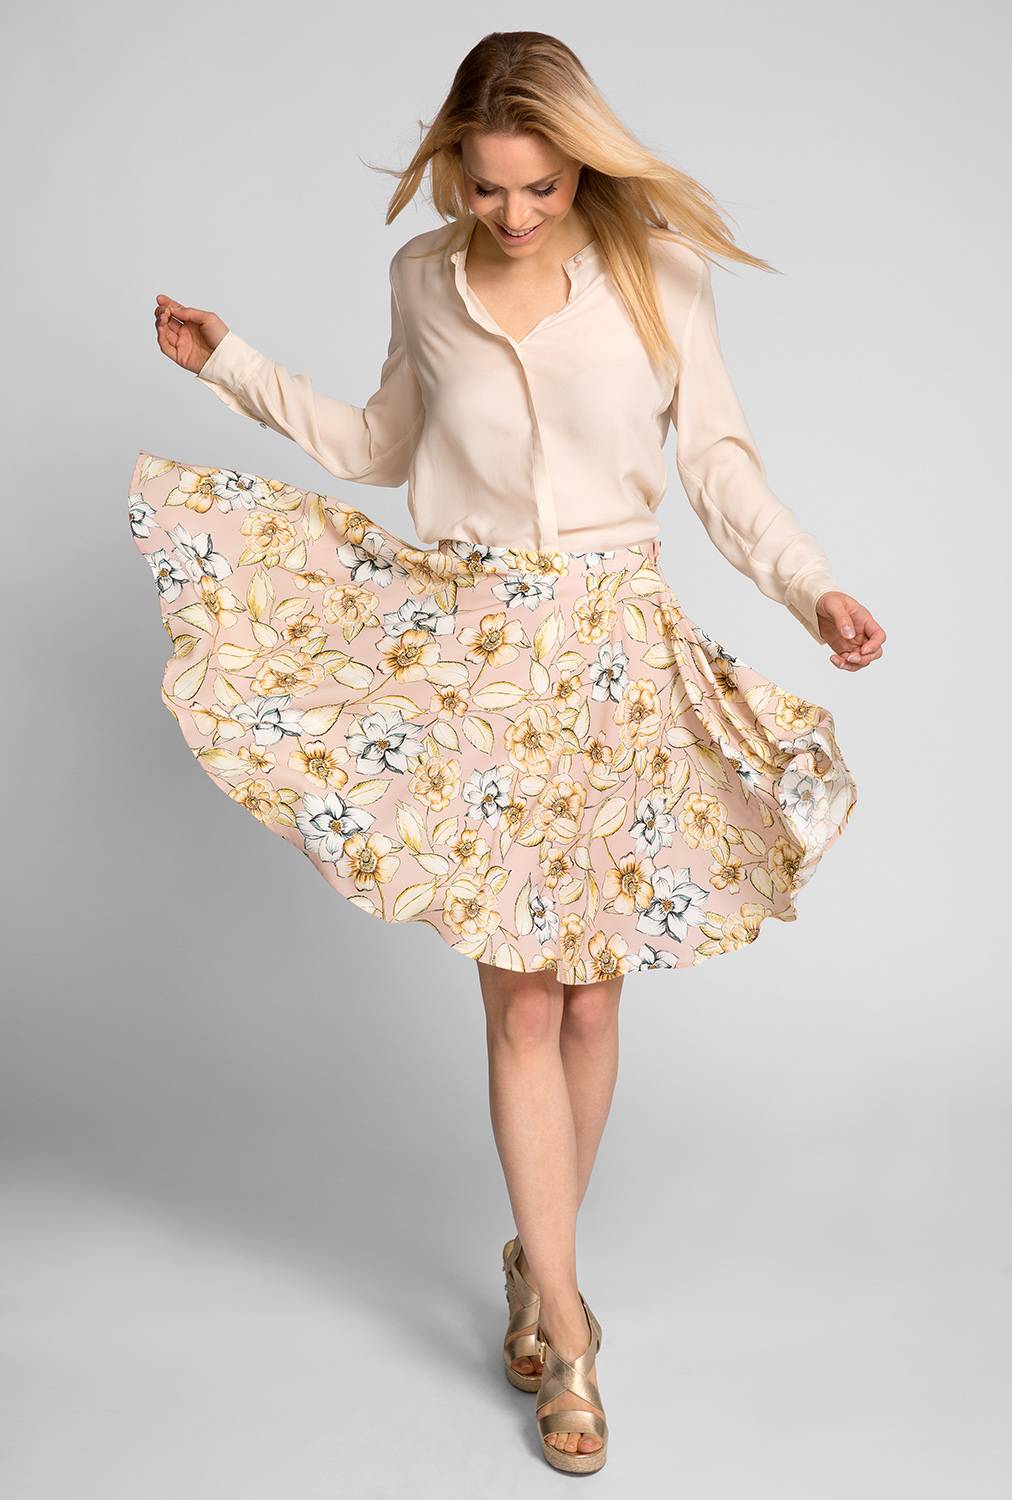 Skirt by Johanna K.